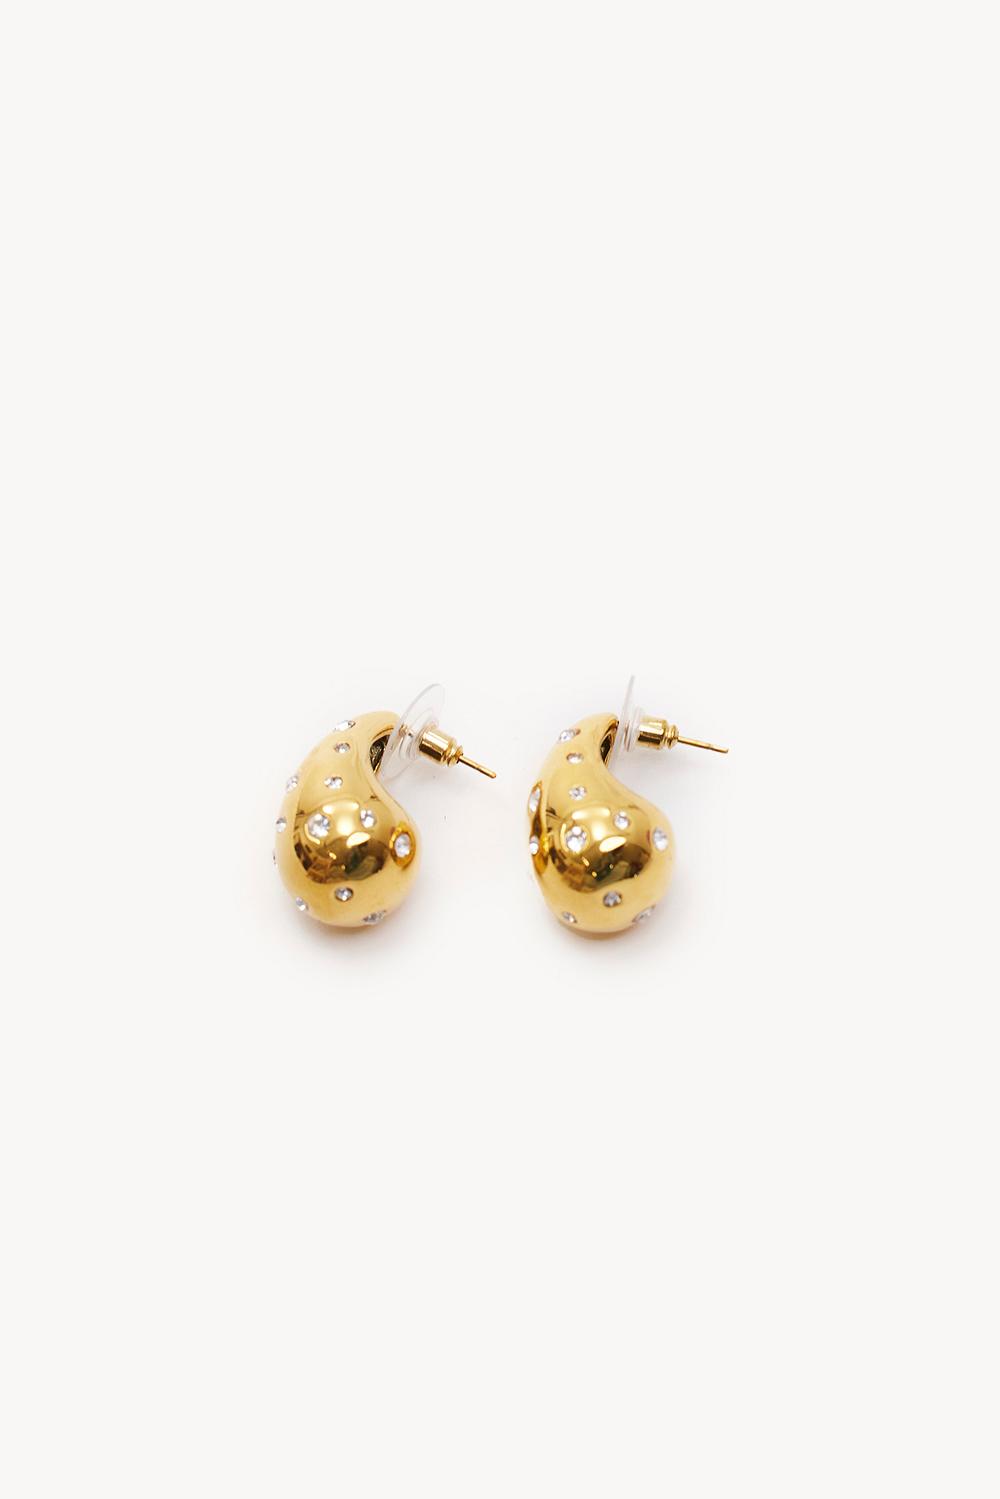 Golden earrings with rhinestones